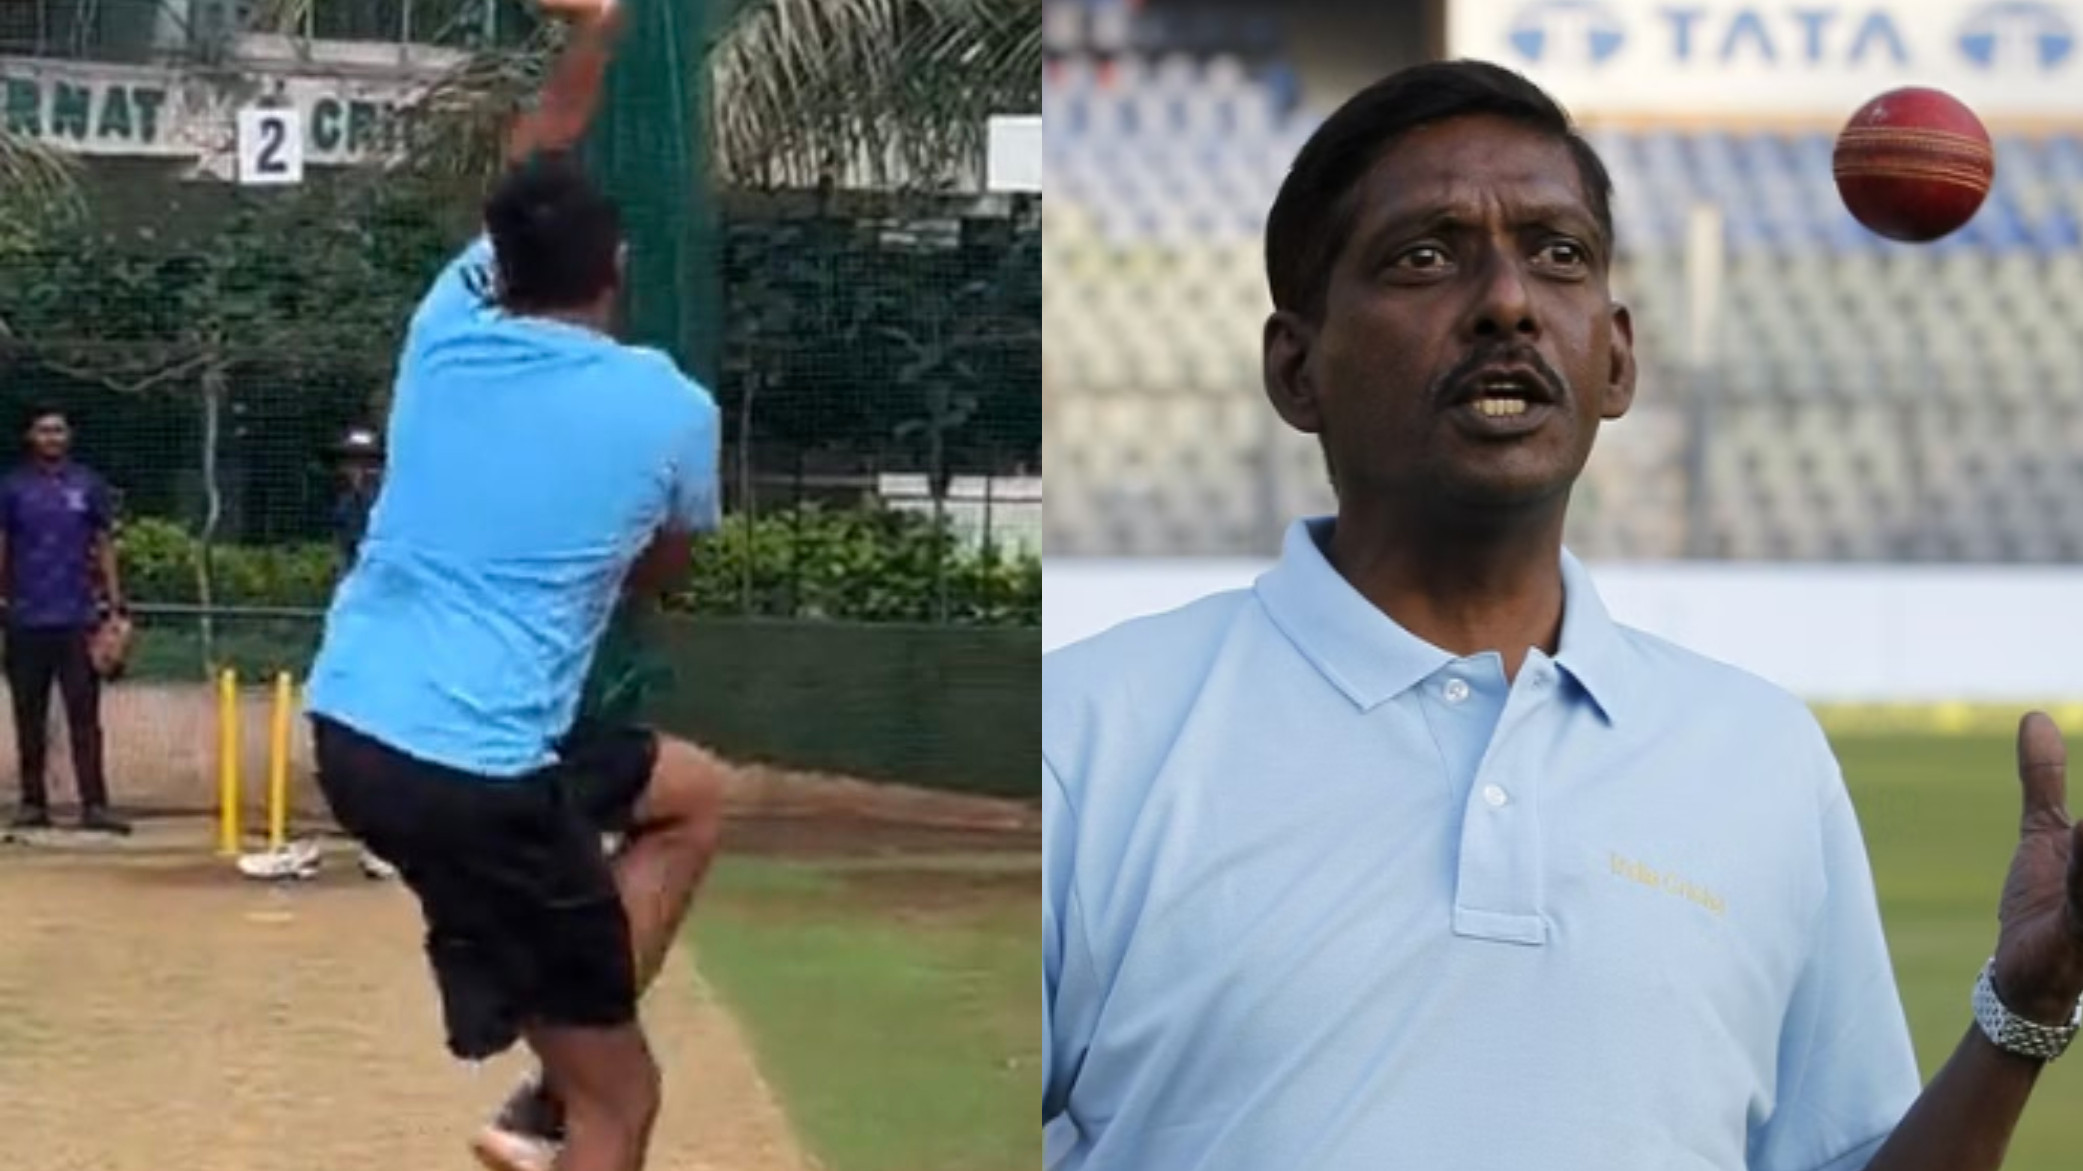 Laxman Sivaramakrishnan raises fresh doubt about R Ashwin’s bowling action in a new attack; gets slammed by fans